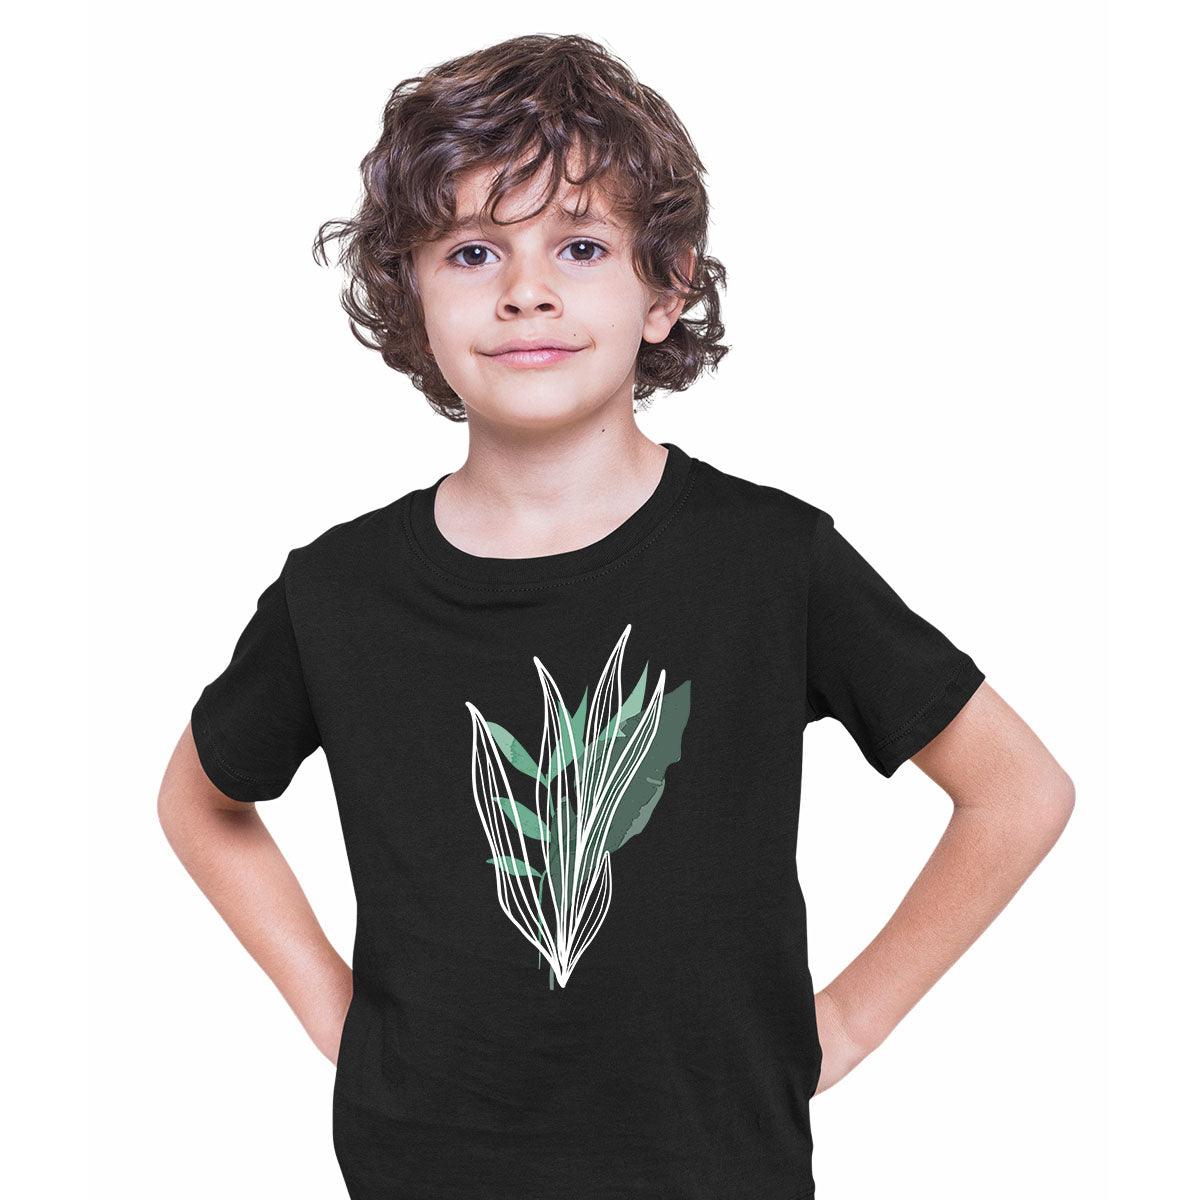 Botanical Wild Leaf Design T-Shirt Colorful Art Print Plant Abstract T-shirt for Kids - Kuzi Tees